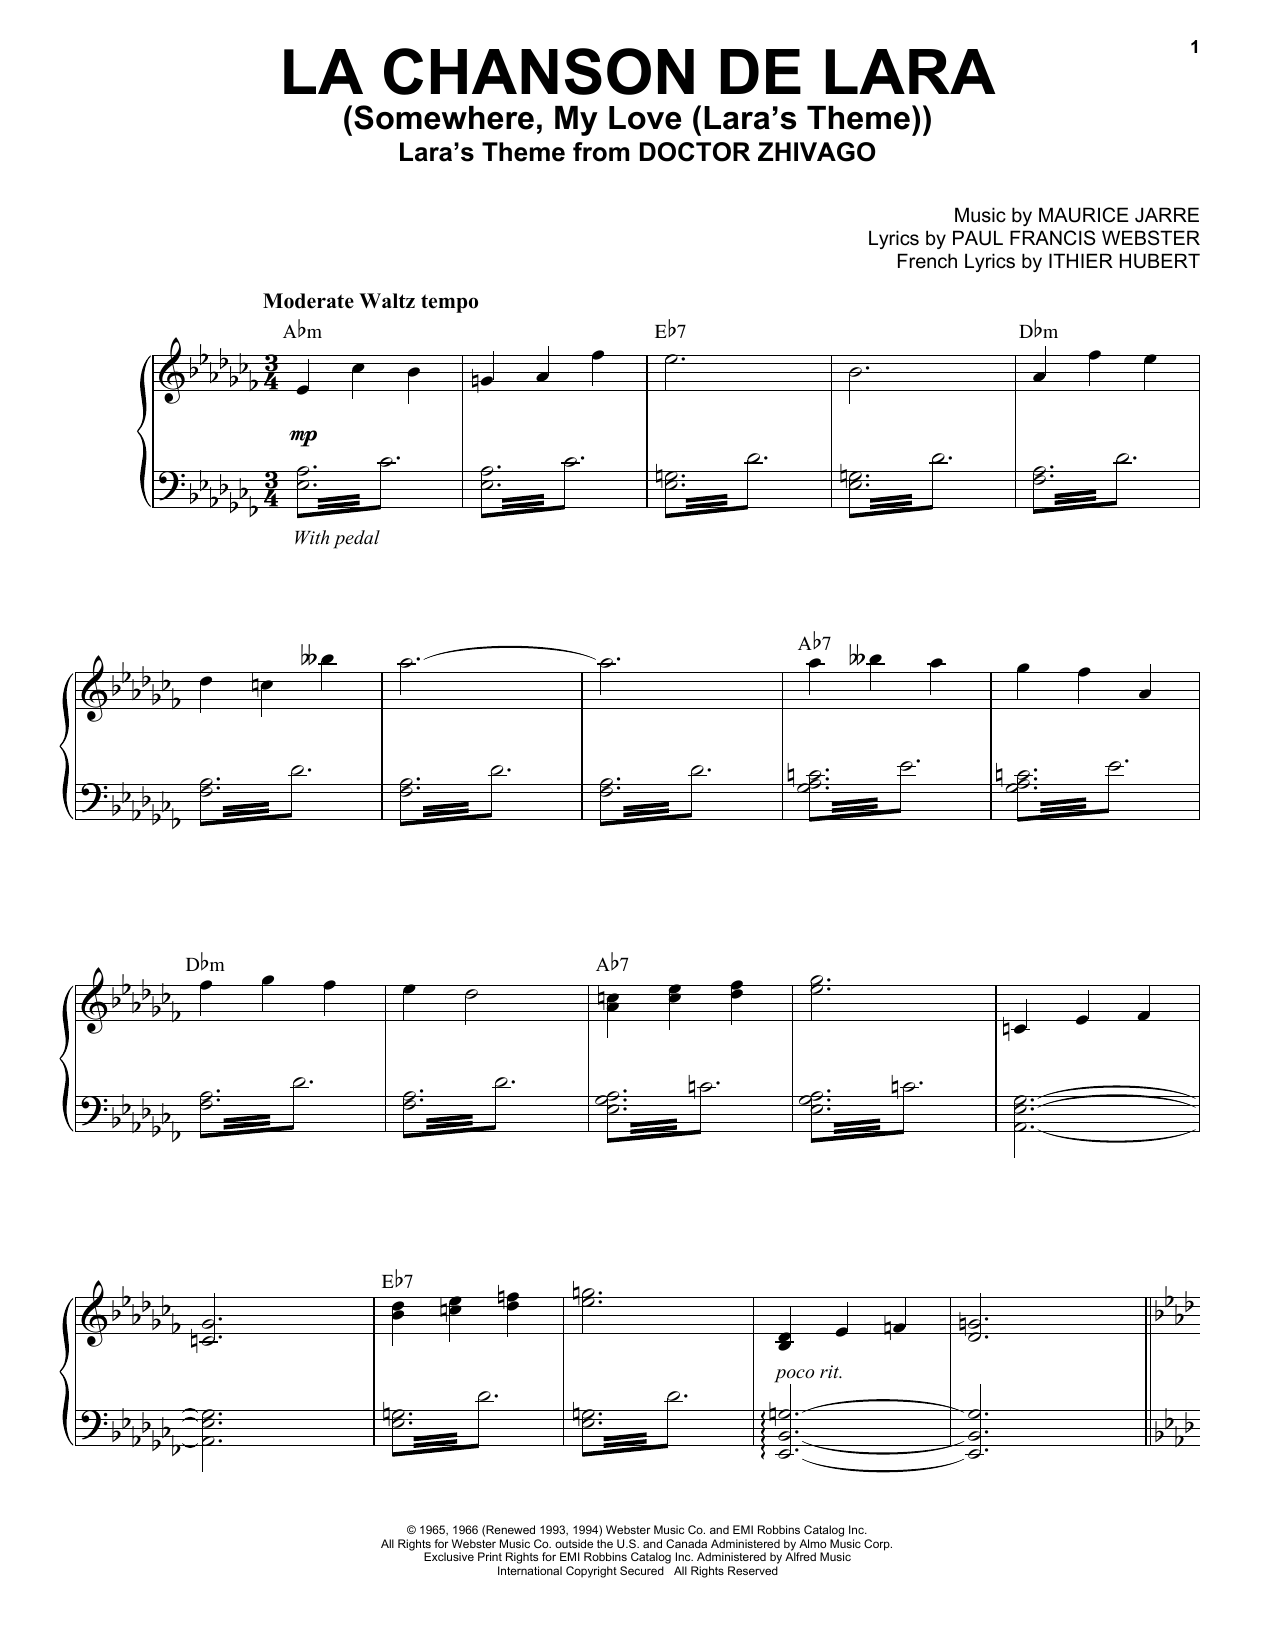 Andrea Bocelli La Chanson De Lara (Somewhere, My Love (Lara's Theme)) Sheet Music Notes & Chords for Piano & Vocal - Download or Print PDF